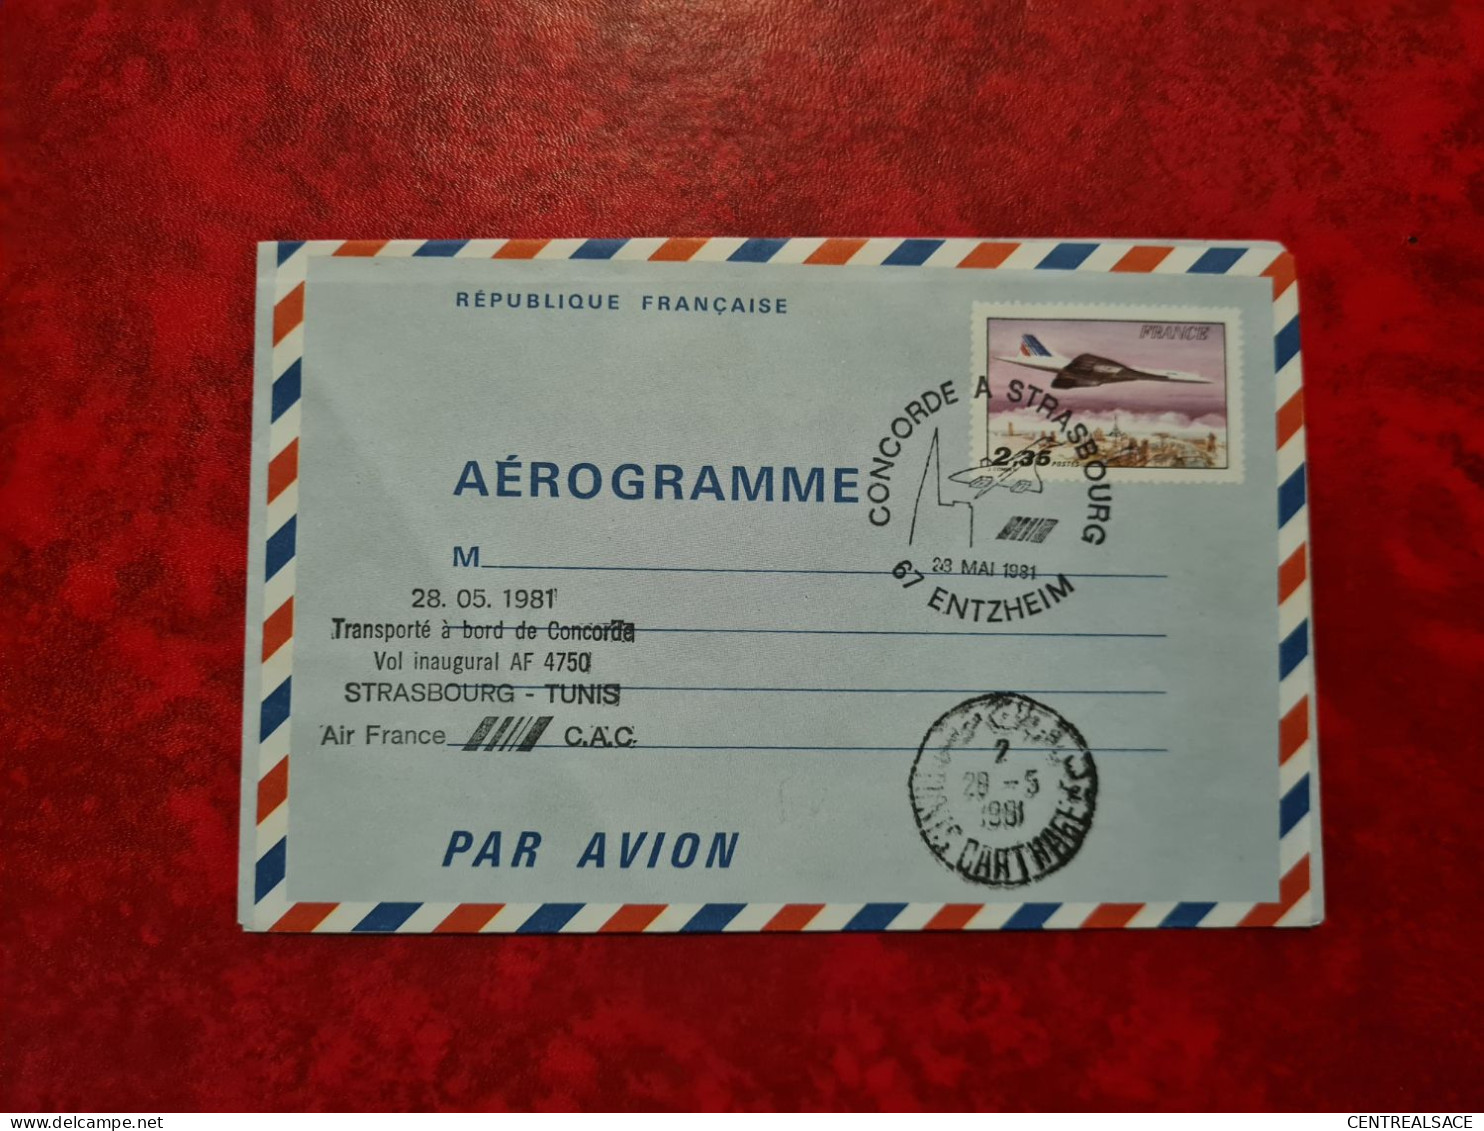 AEROGRAMME 1981 CONCORDE A STRASBOURG ENTZHEIM VOL INAUGURAL STRASBOURG TUNIS - Aerogramas